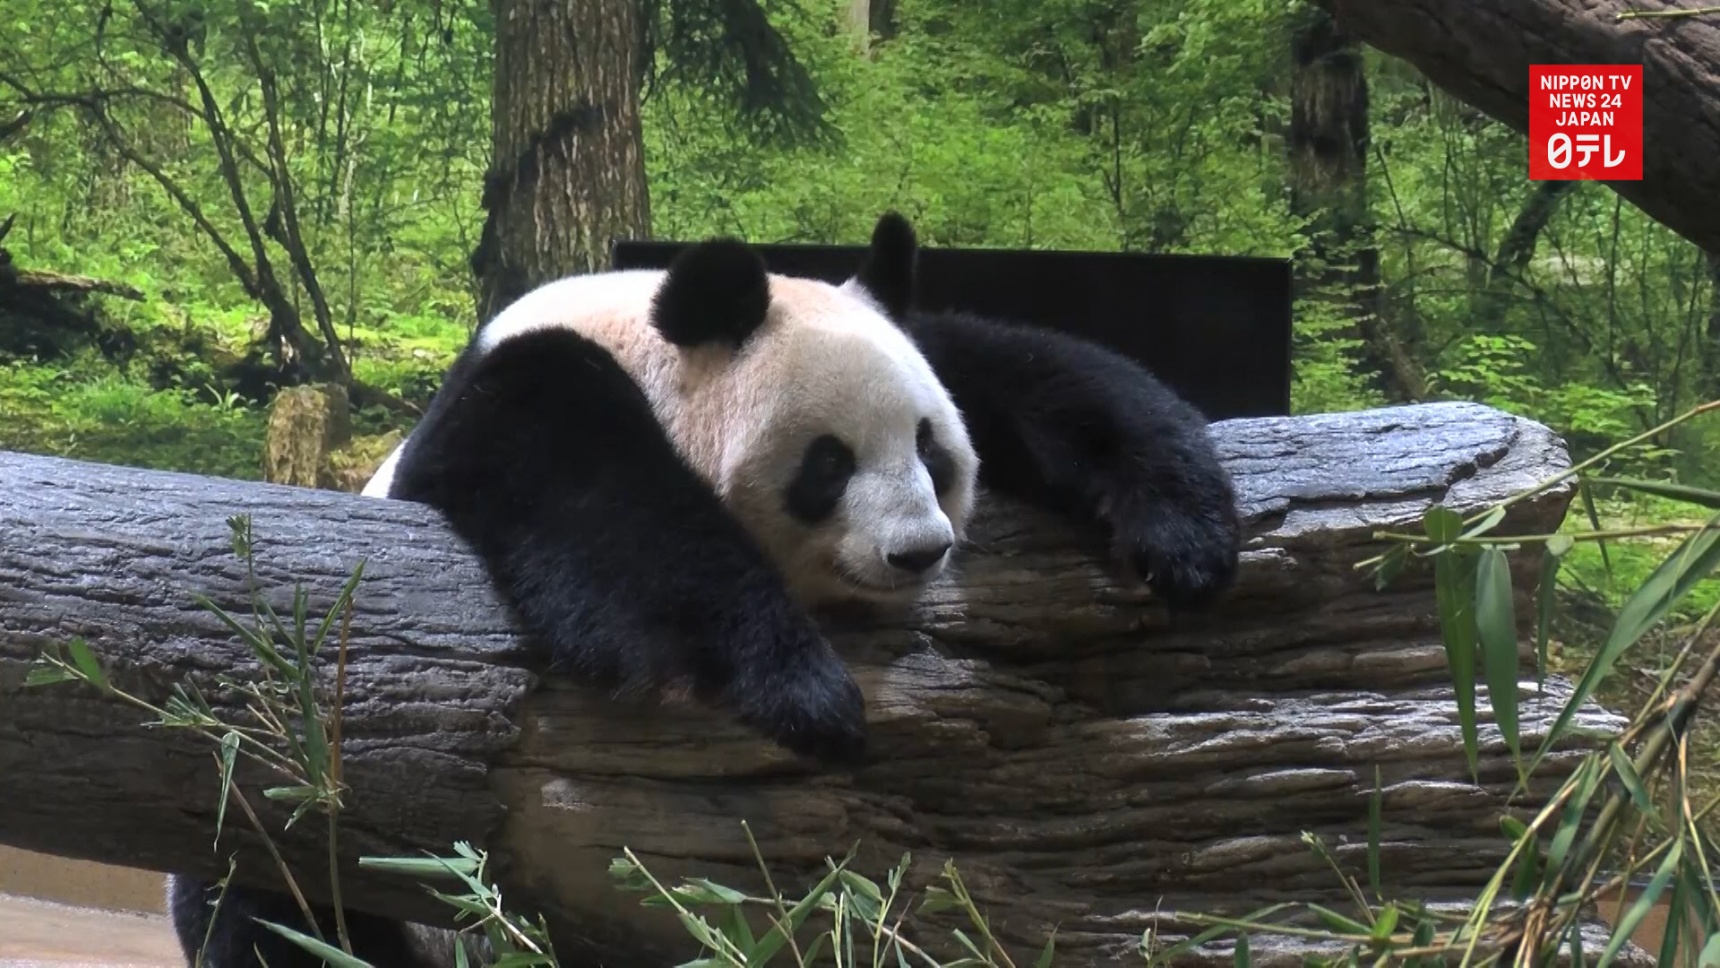 Ueno Zoo Opens New Panda Habitat